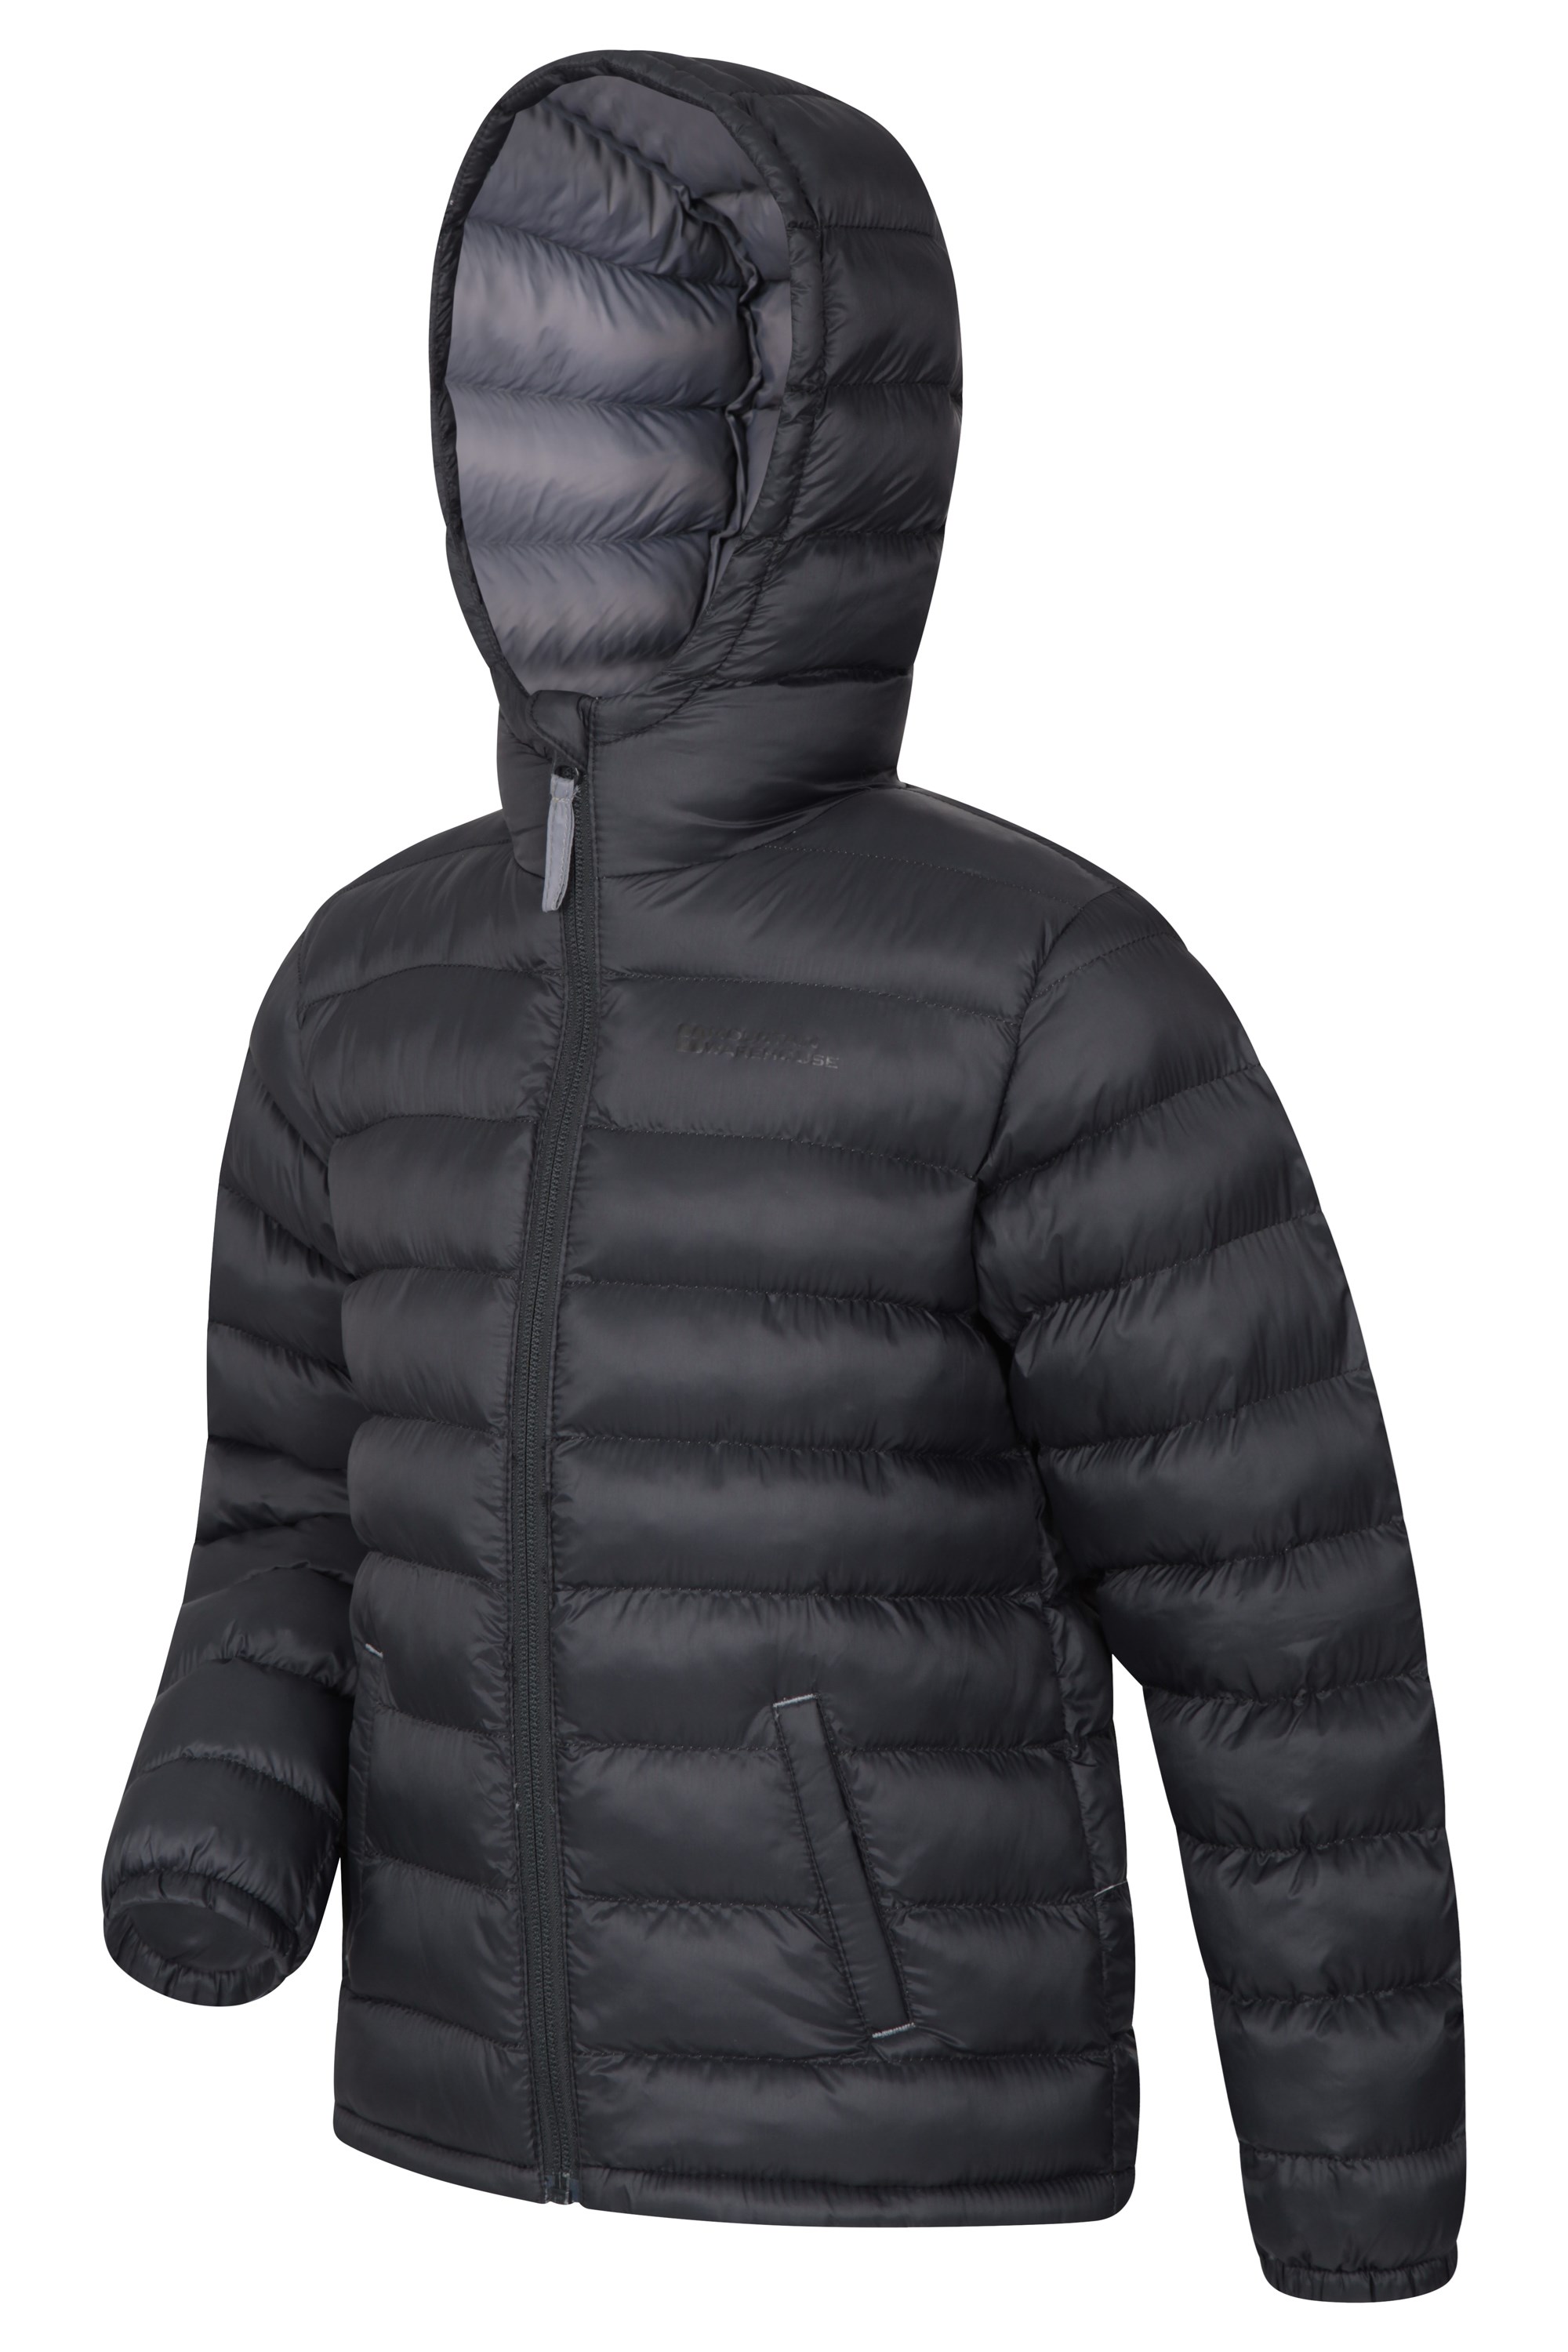 mountain warehouse black puffer jacket